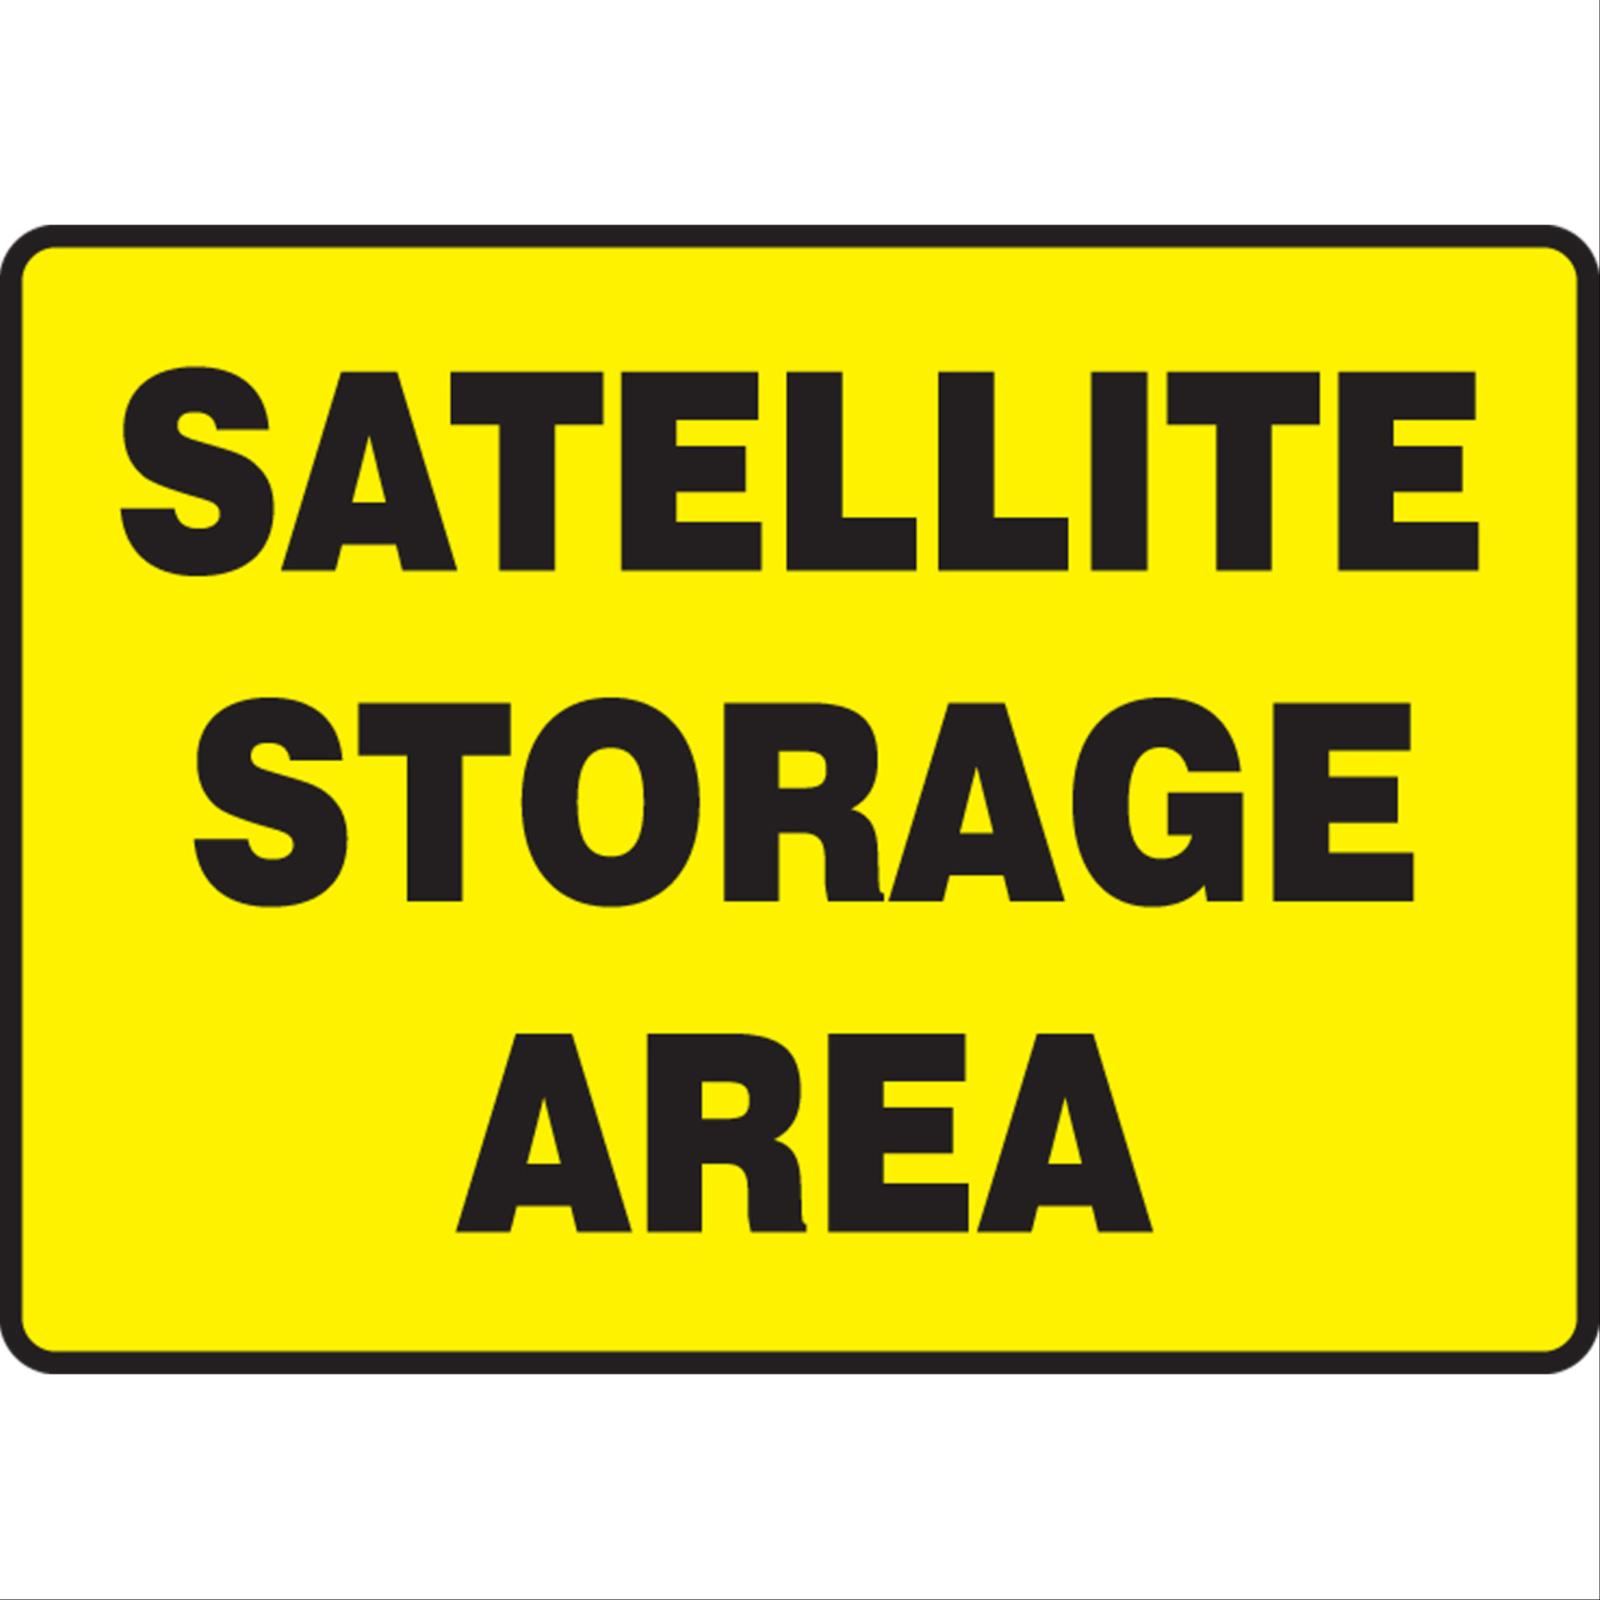 Satellite Storage Area